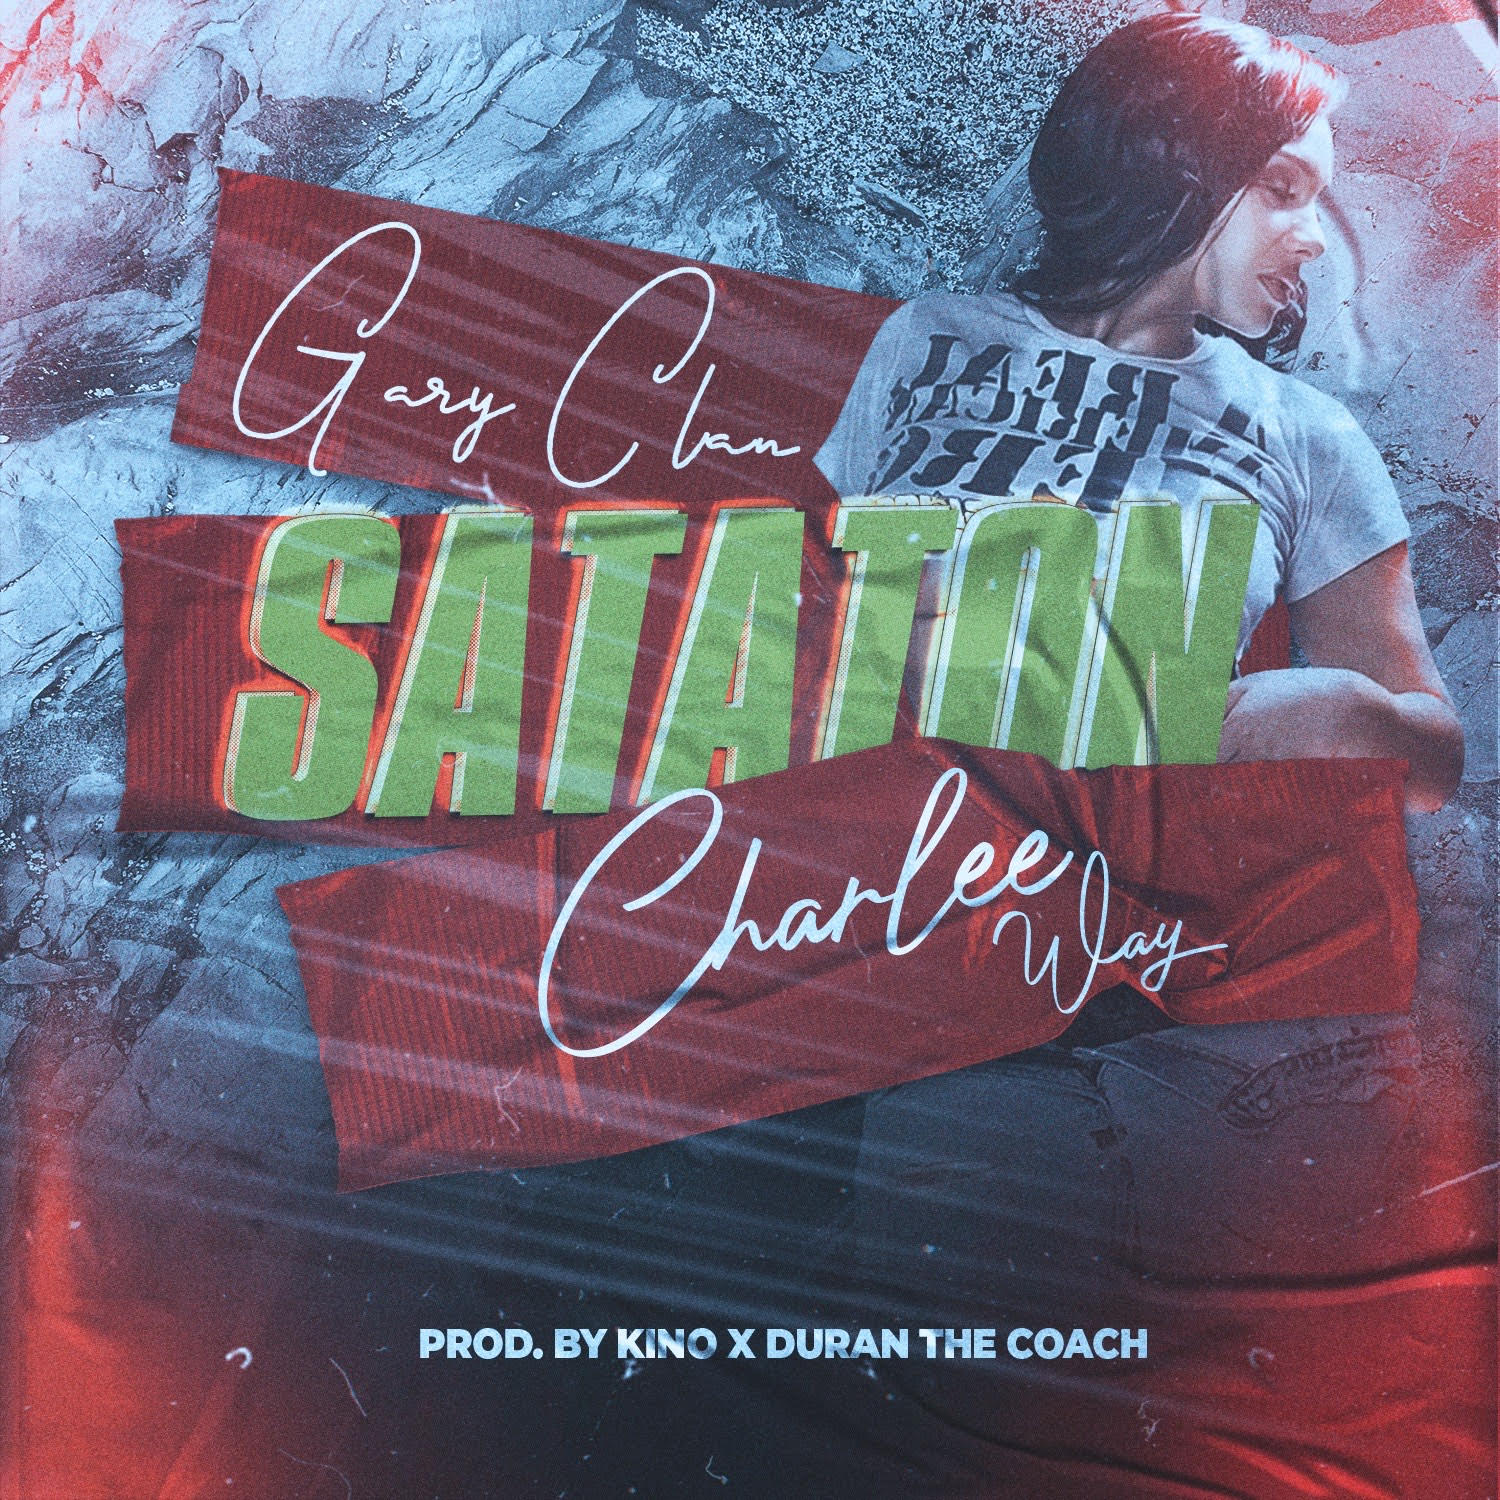 Gary Clan Y Charlee Way – Sataton